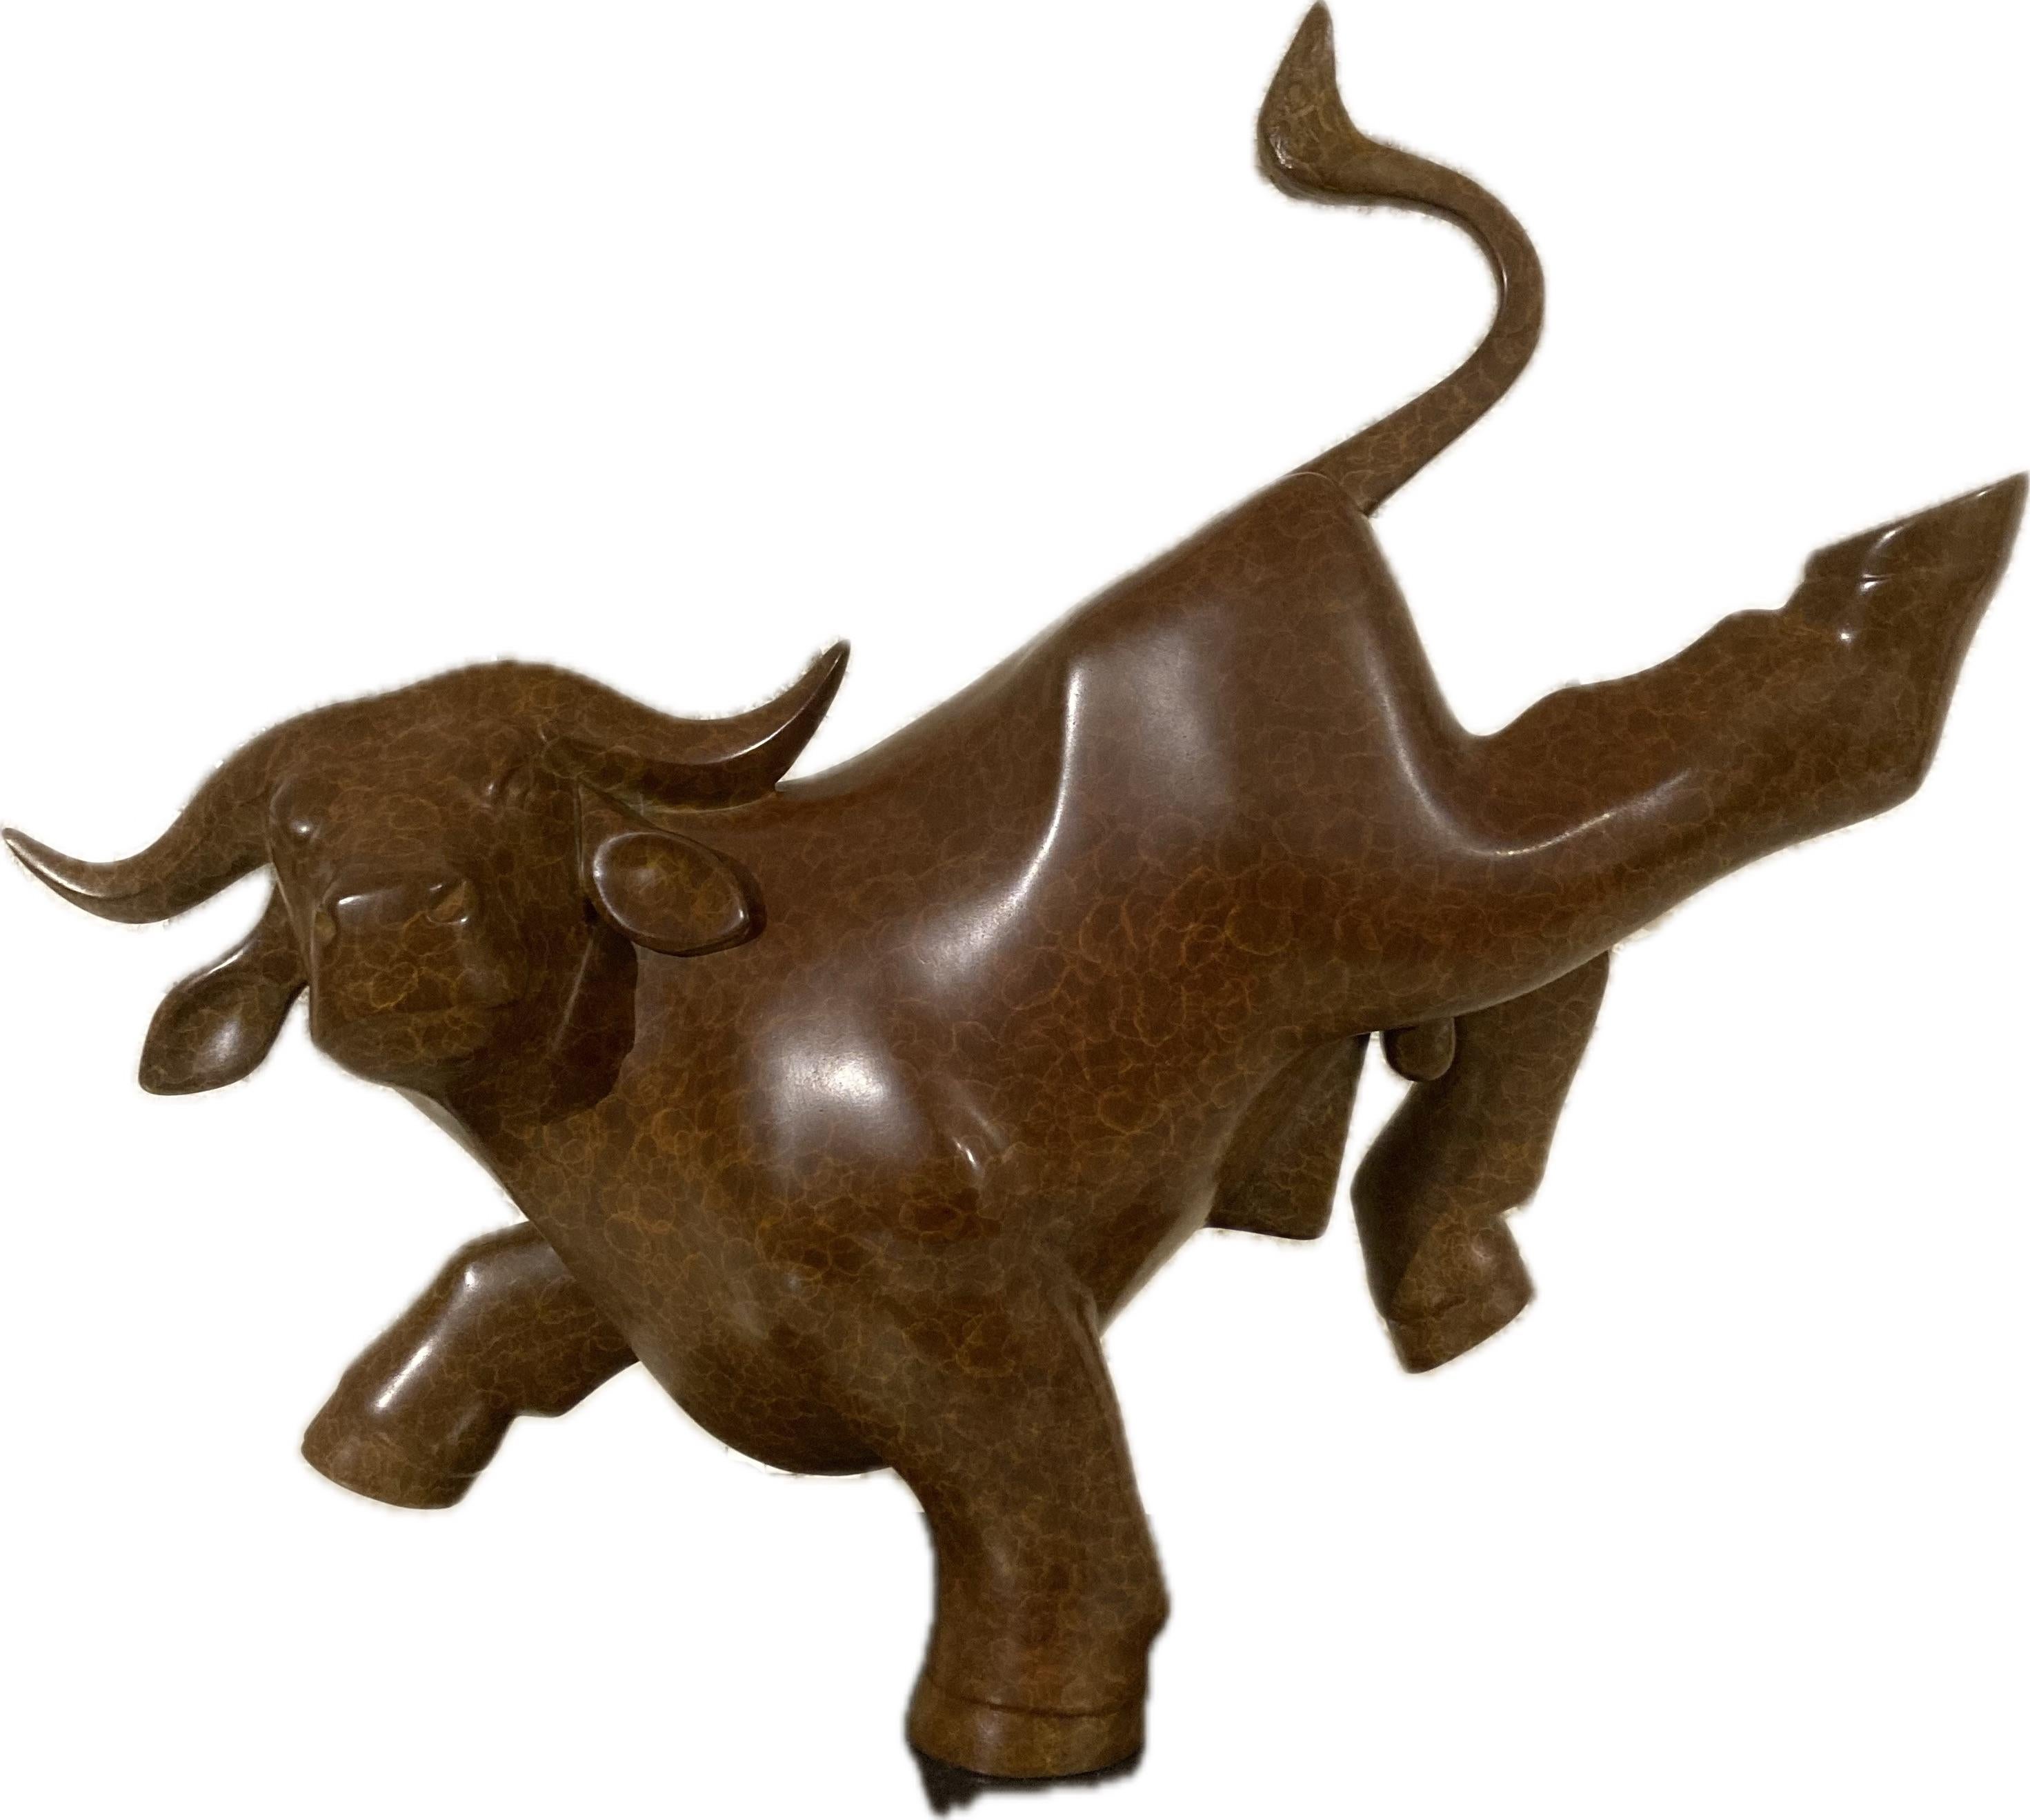 Evert den Hartog Figurative Sculpture - Lentestier no. 2 Spring Bull Bronze Sculpture Animal Limited Edition Dark Brown 